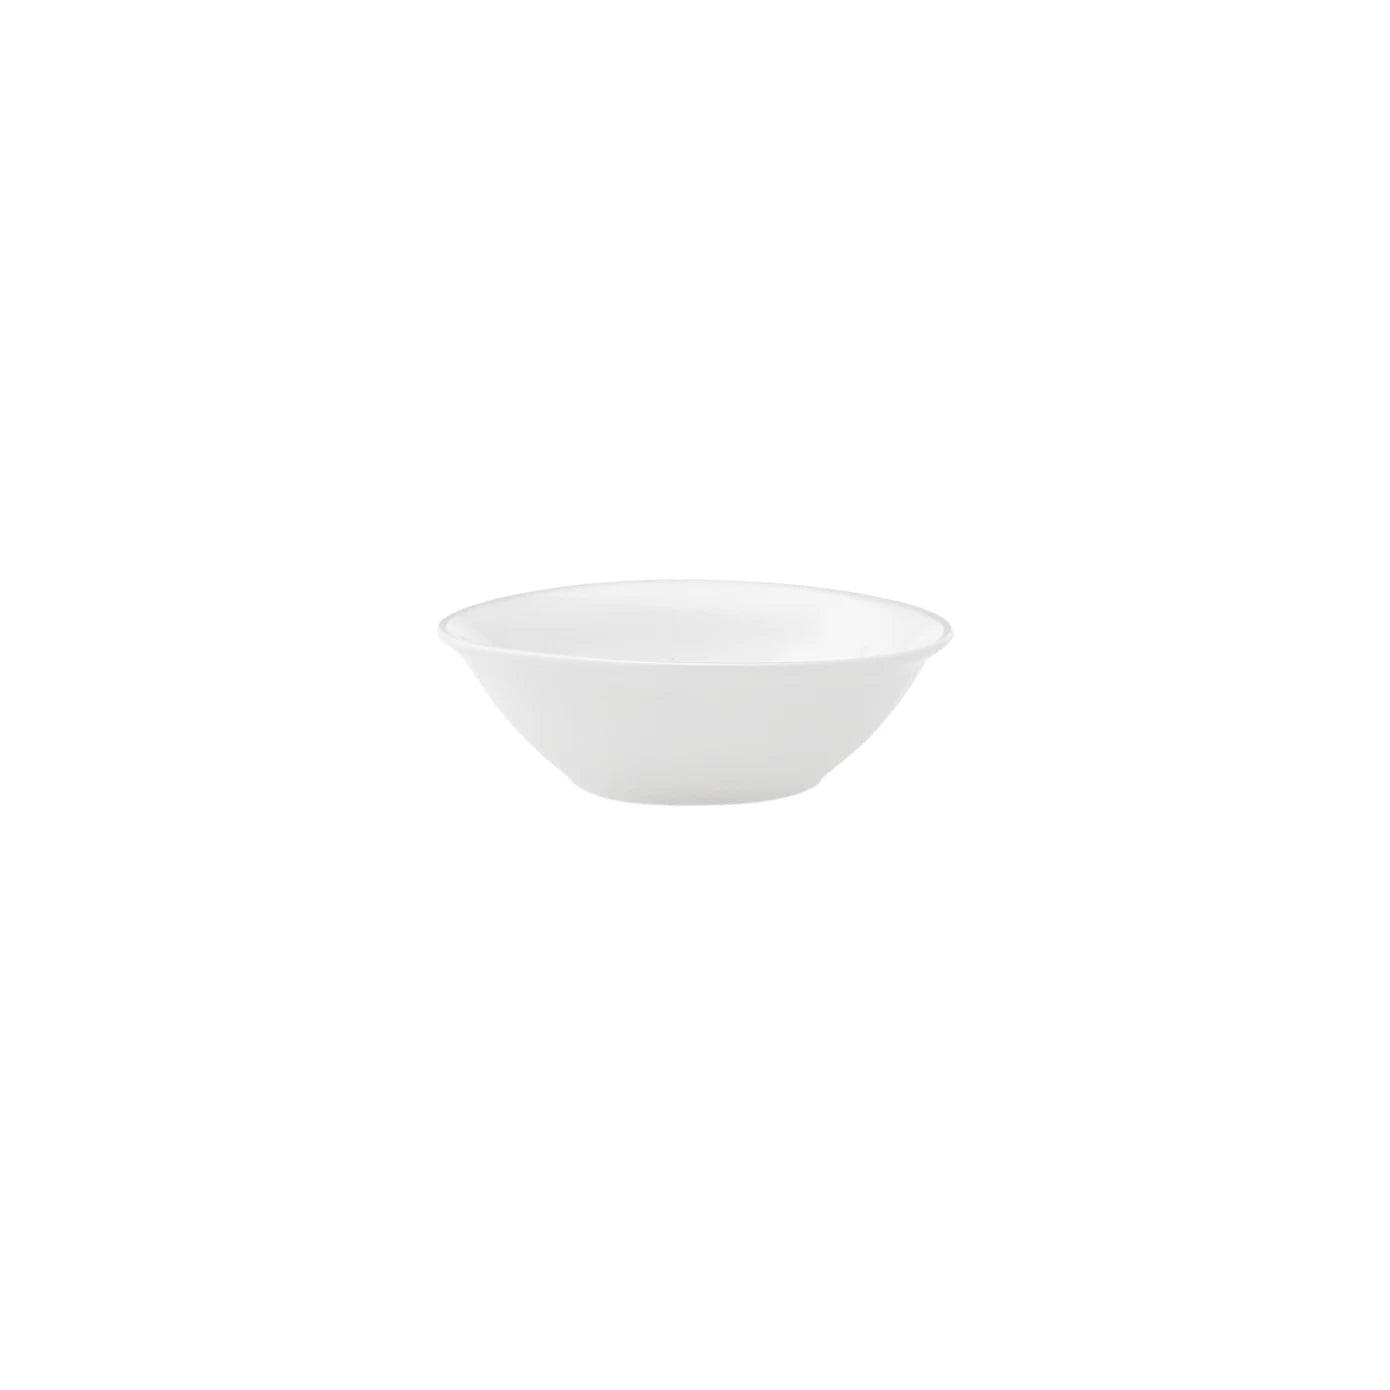 Porcelain Dinnerware Set - Elegant and Versatile Tableware Collection